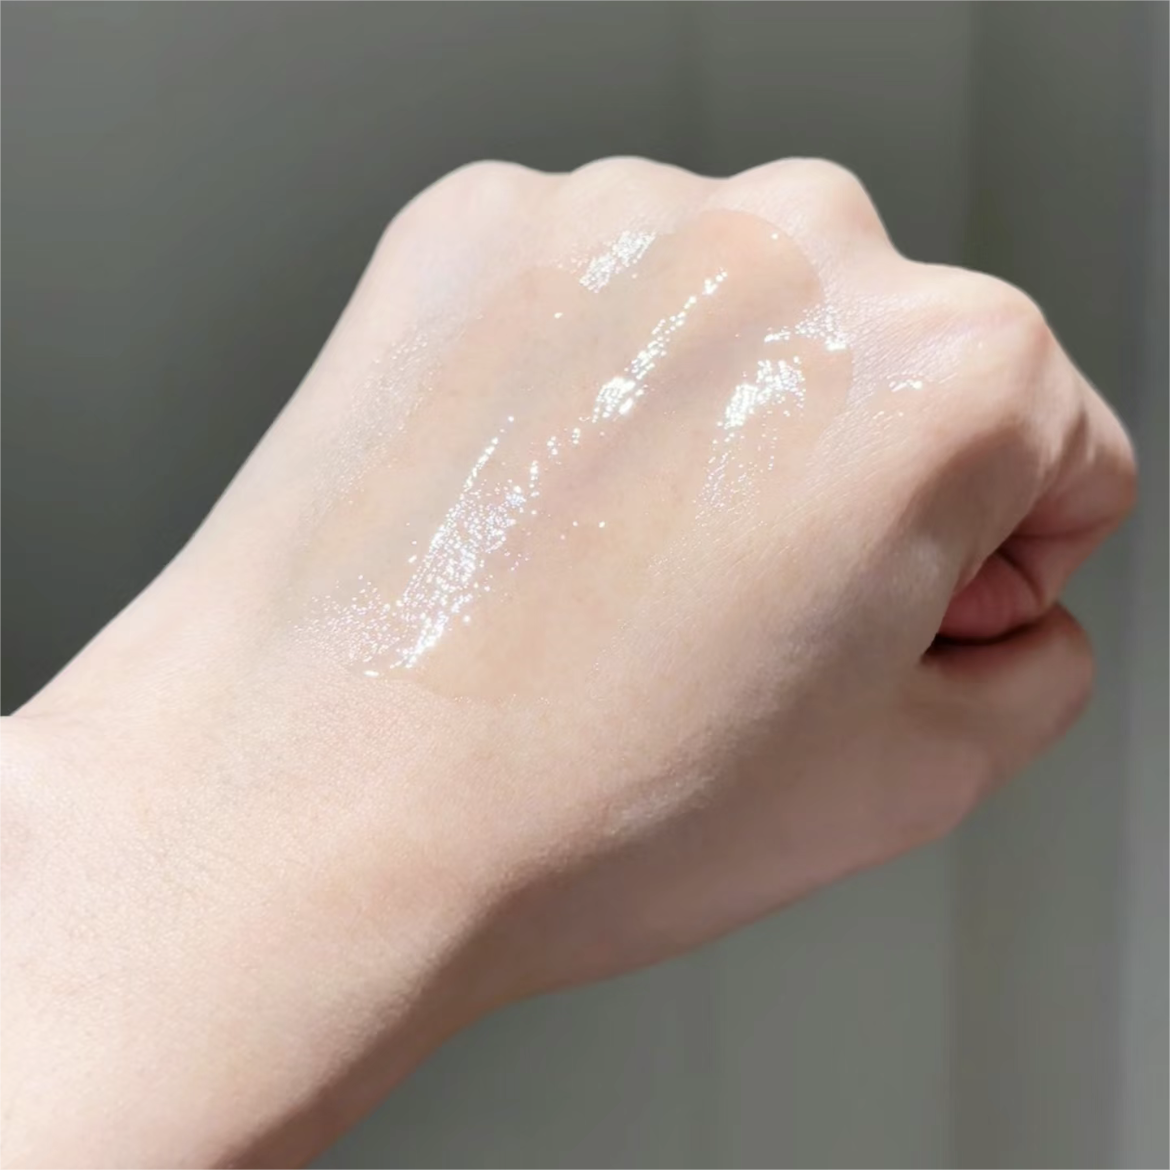 CHANDO Snow Skin Radiance Whitening Firming Essence 40ml 自然堂雪肌追光焕白紧致精华液